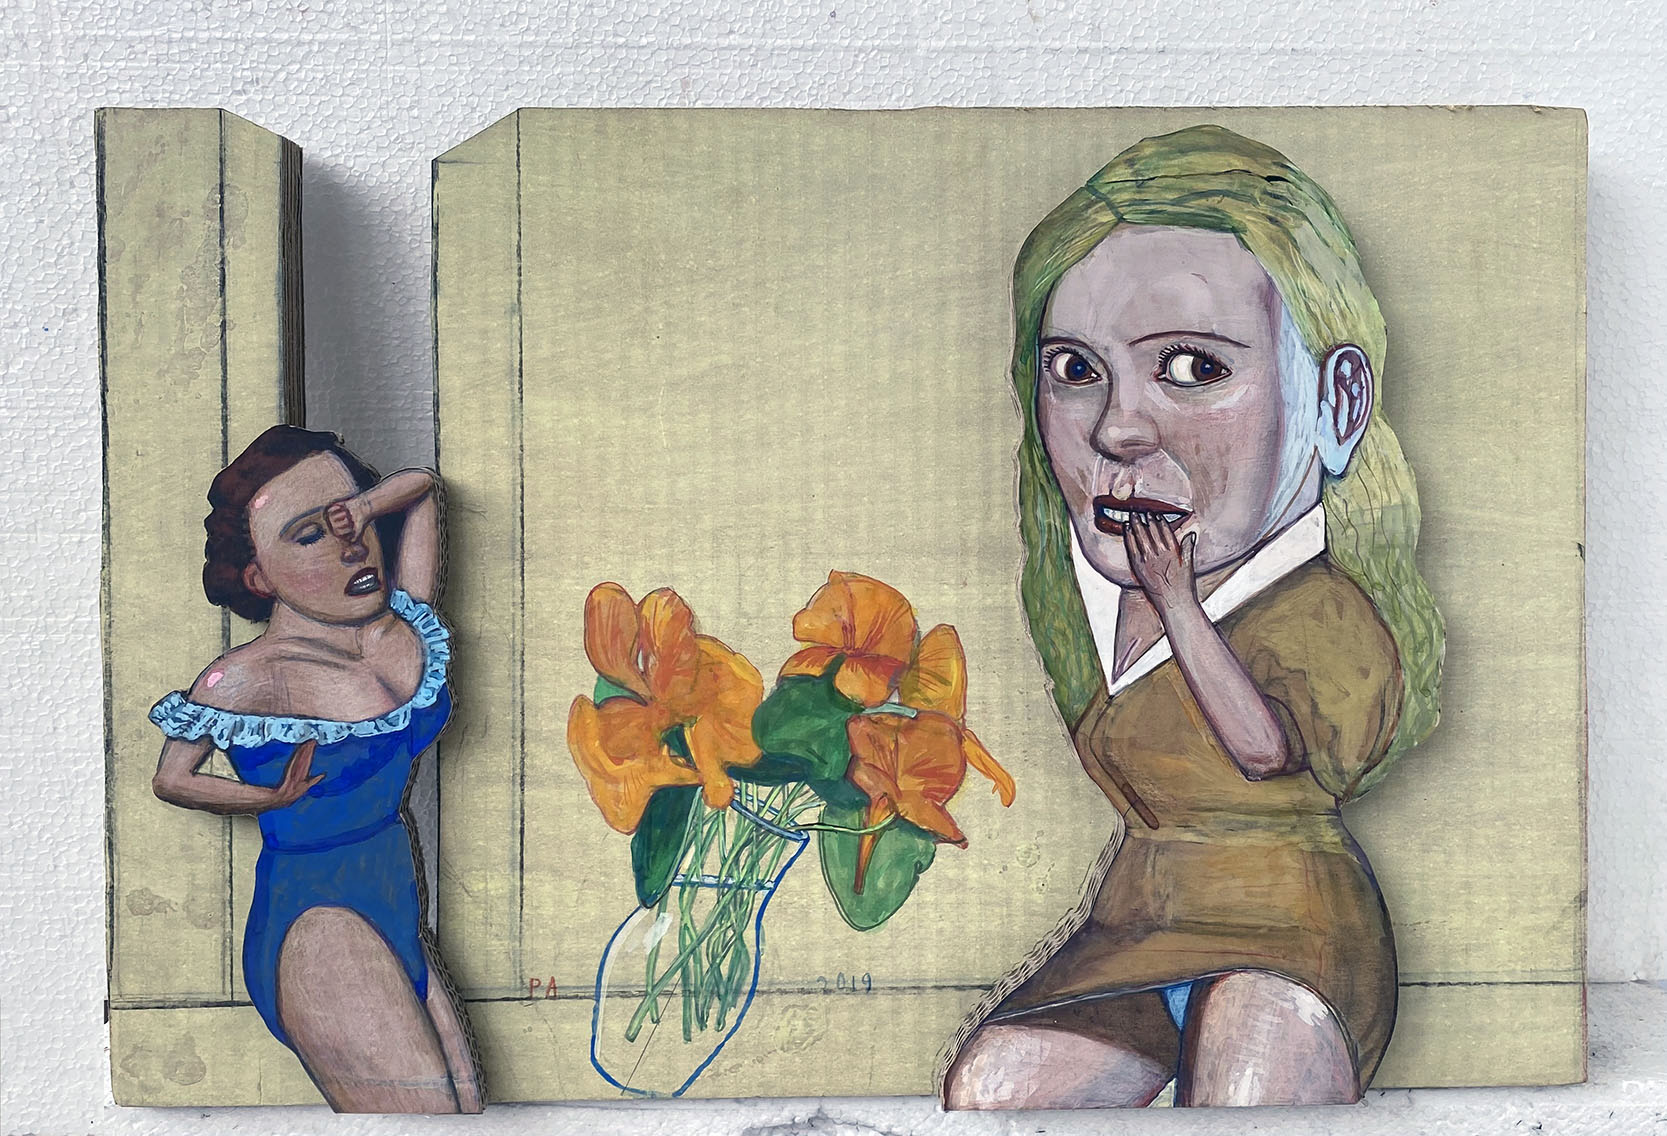 Pat Andrea, Honte et désespoir, mixed media on carton, 60 x 40 x 6 cm, 2020